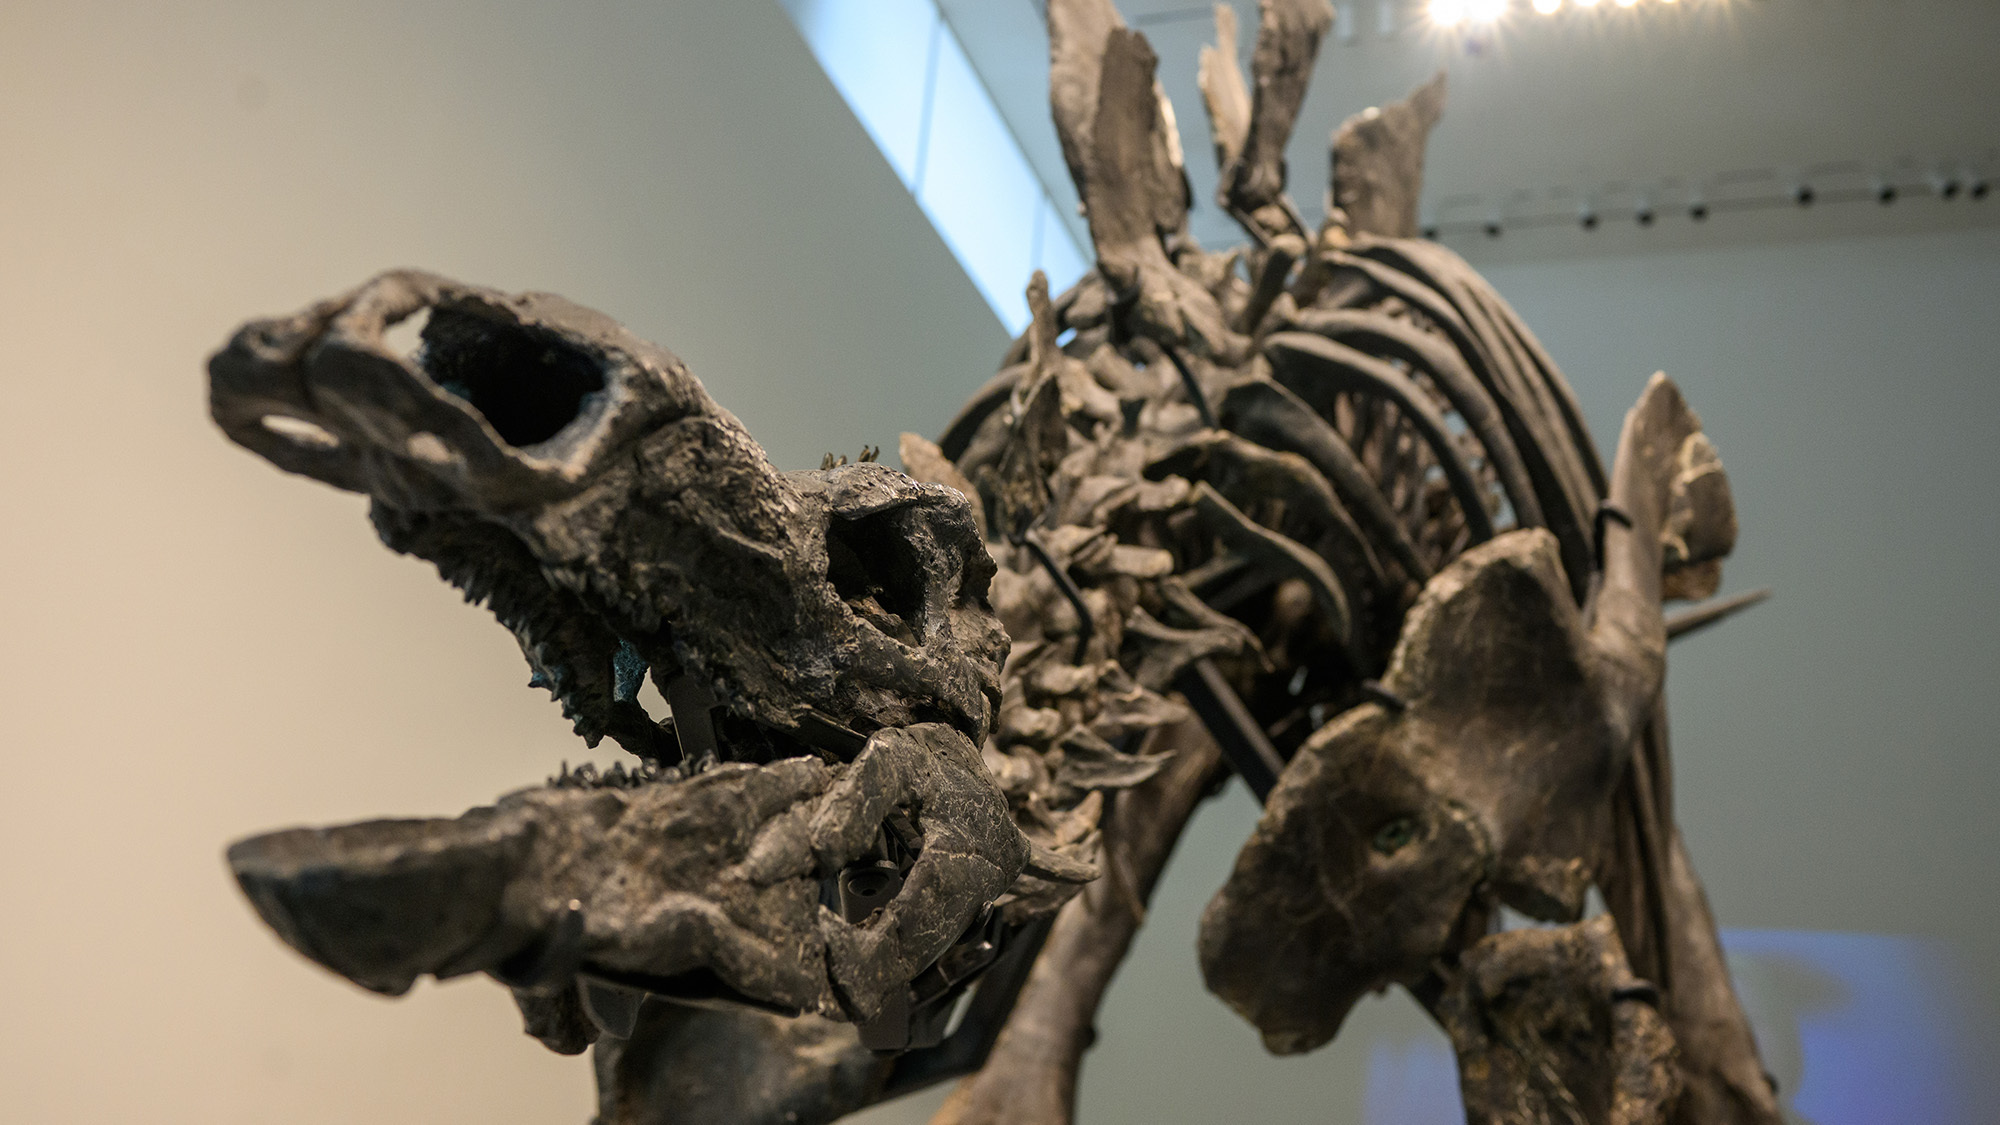 Stegosaurus 'Apex' Sold to Billionaire for Nearly $45 Million